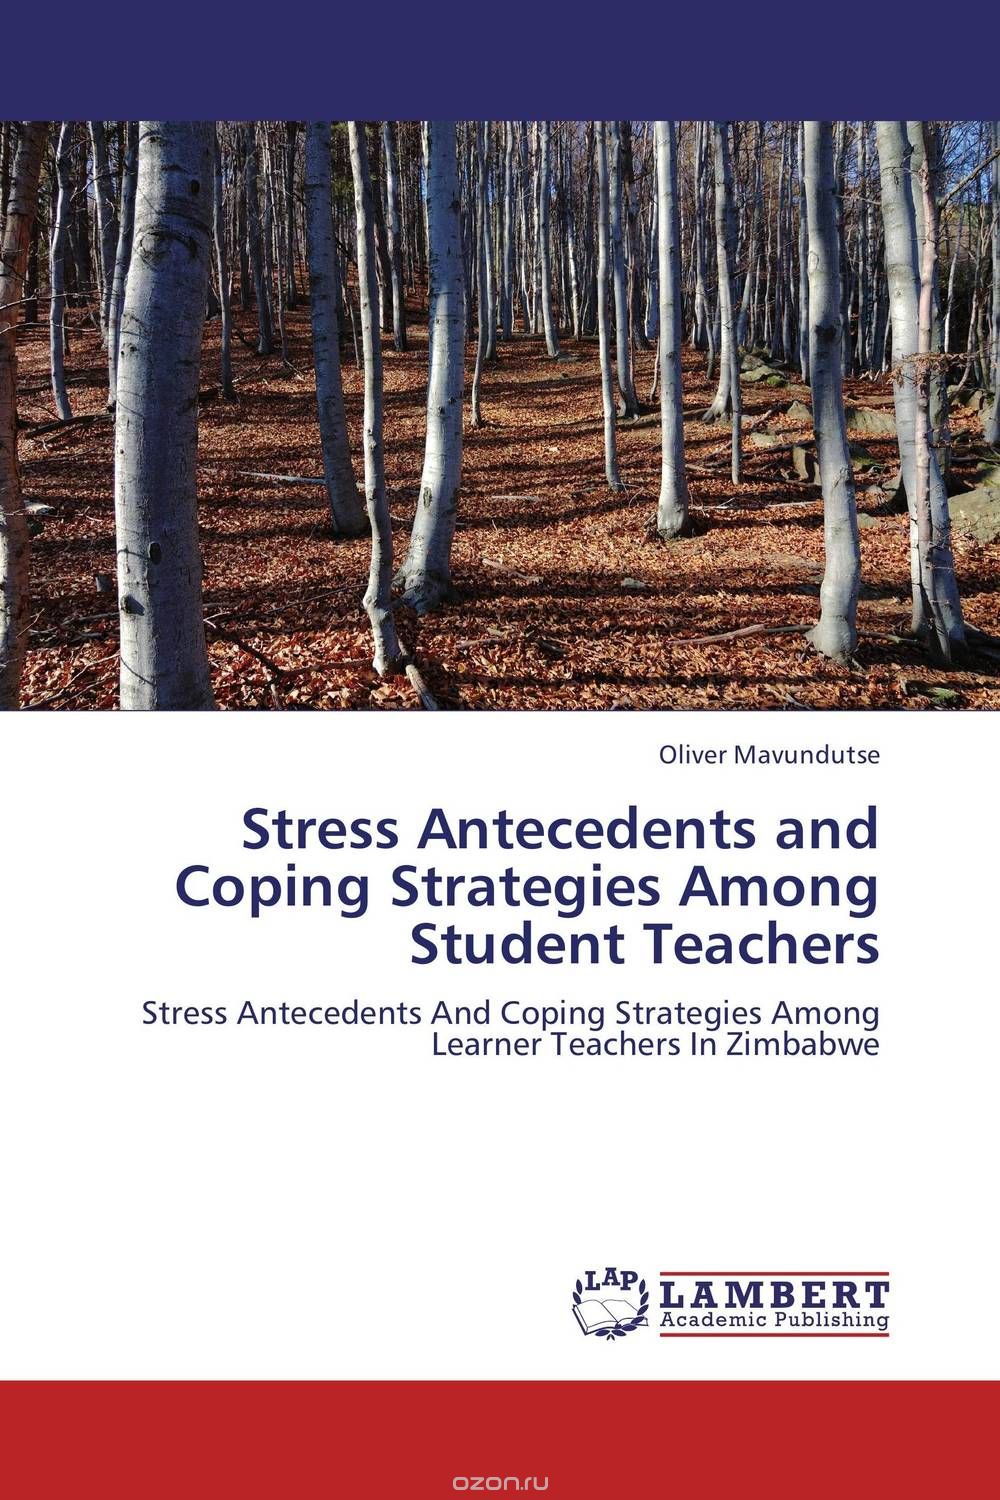 Скачать книгу "Stress Antecedents and Coping Strategies Among Student Teachers"